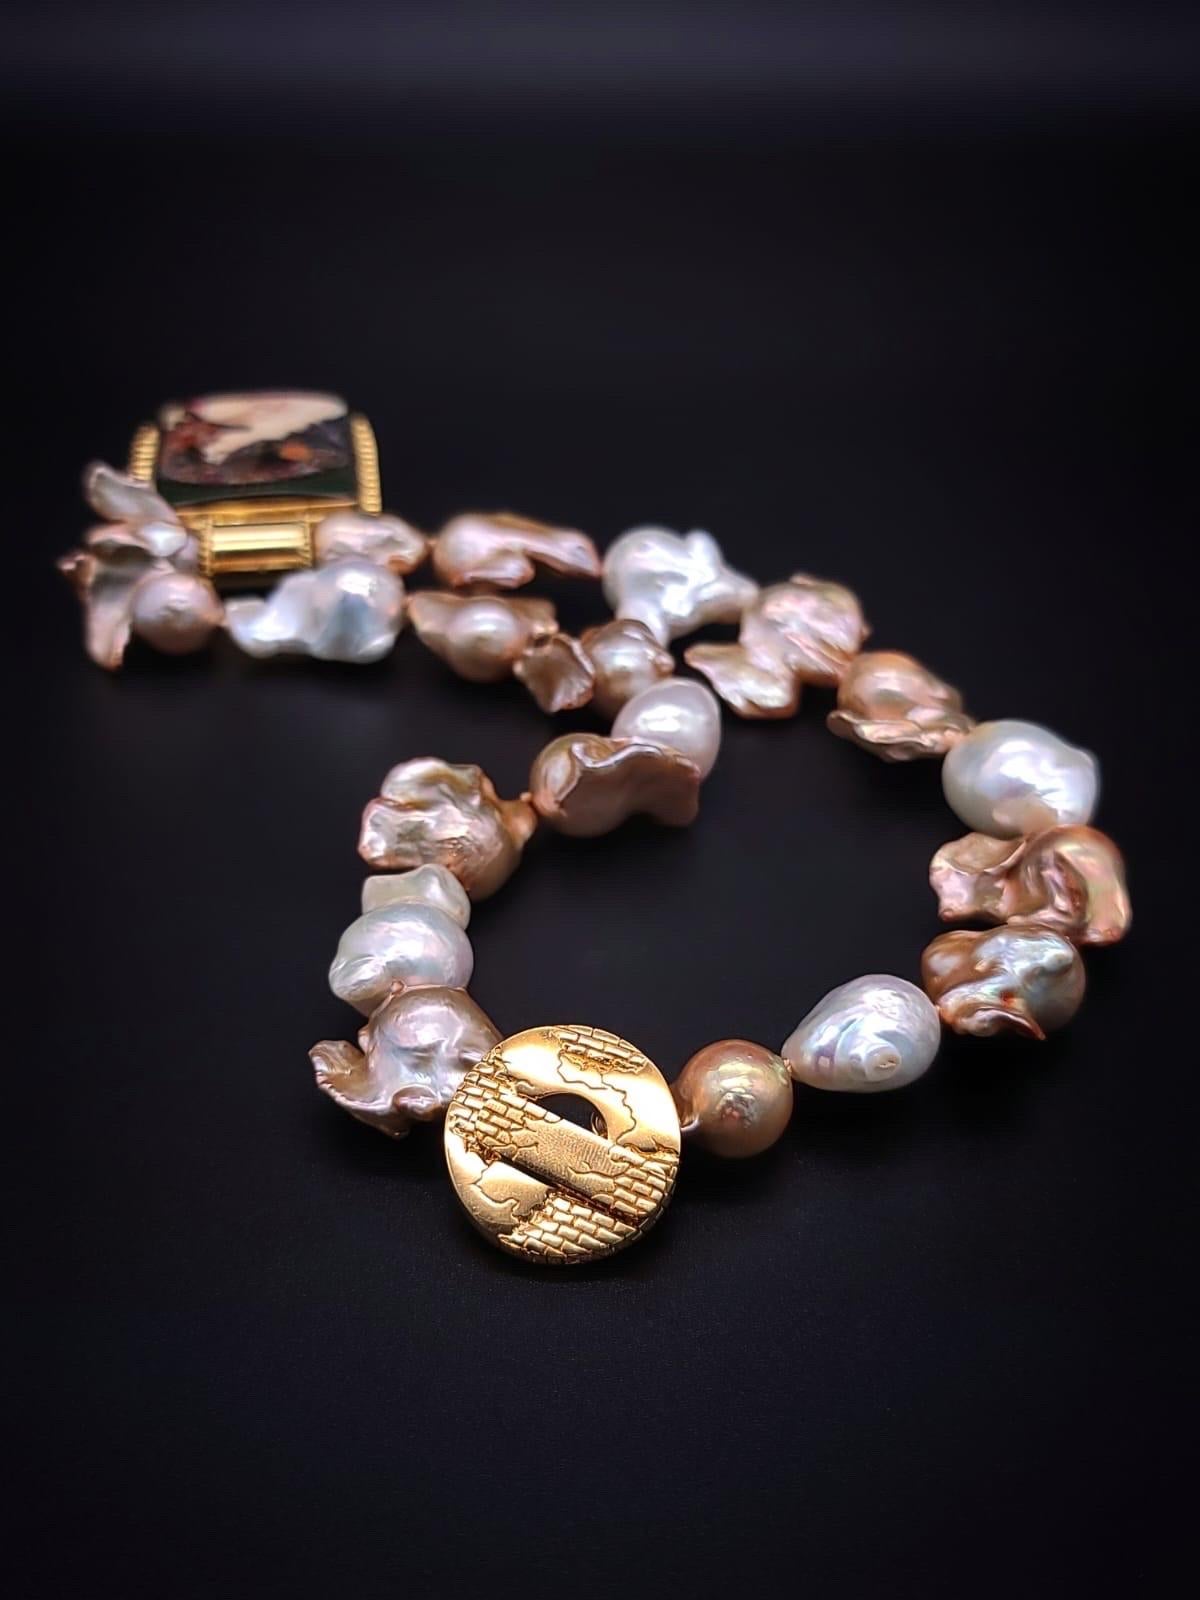 A.Jeschel Glamorous Baroque Pearl with an Art Deco miniature pendant. 3